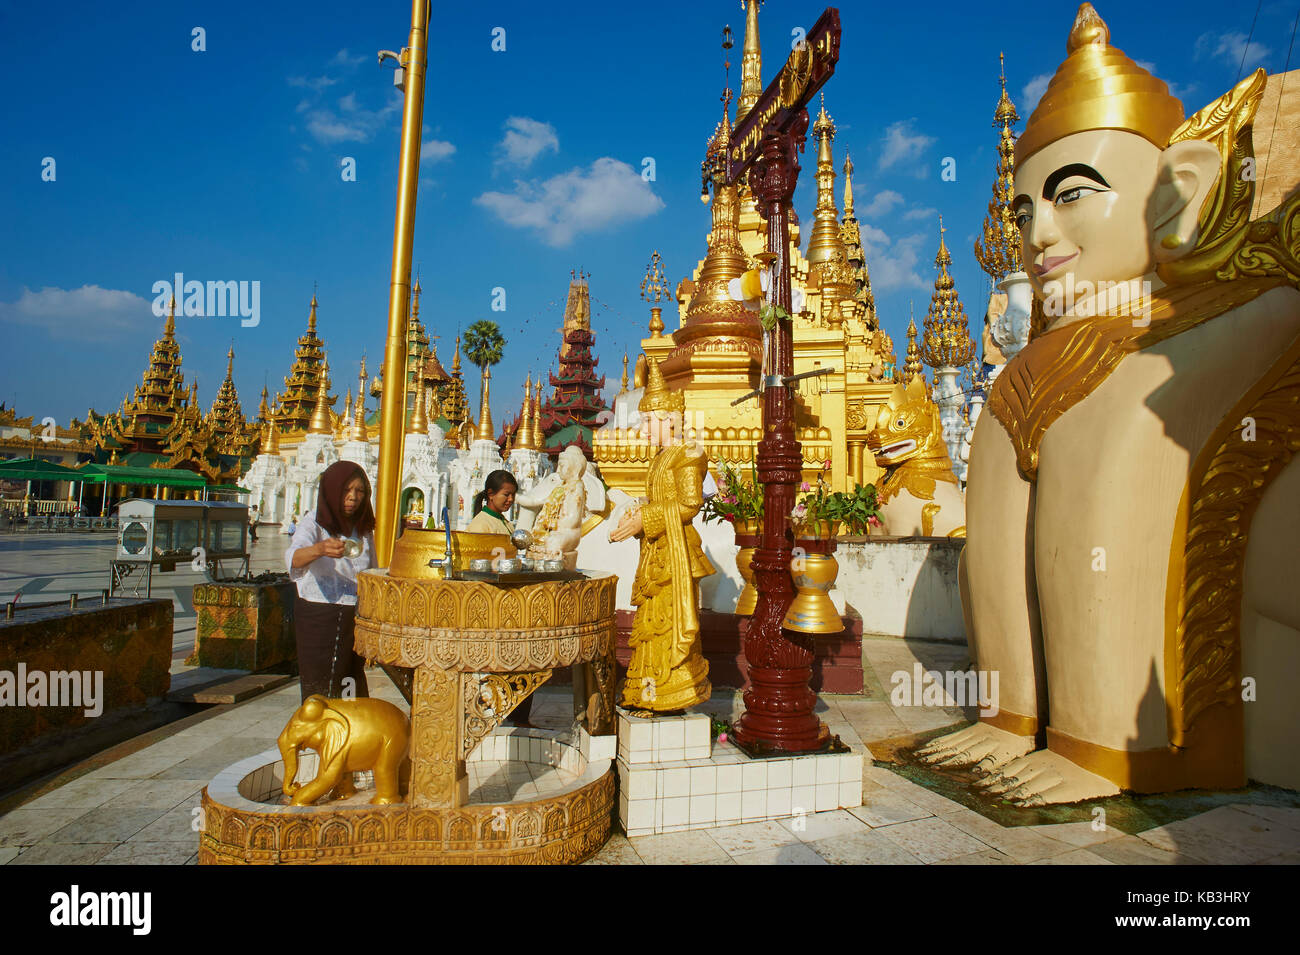 La pagode schwedagon, Myanmar, l'Asie, Banque D'Images